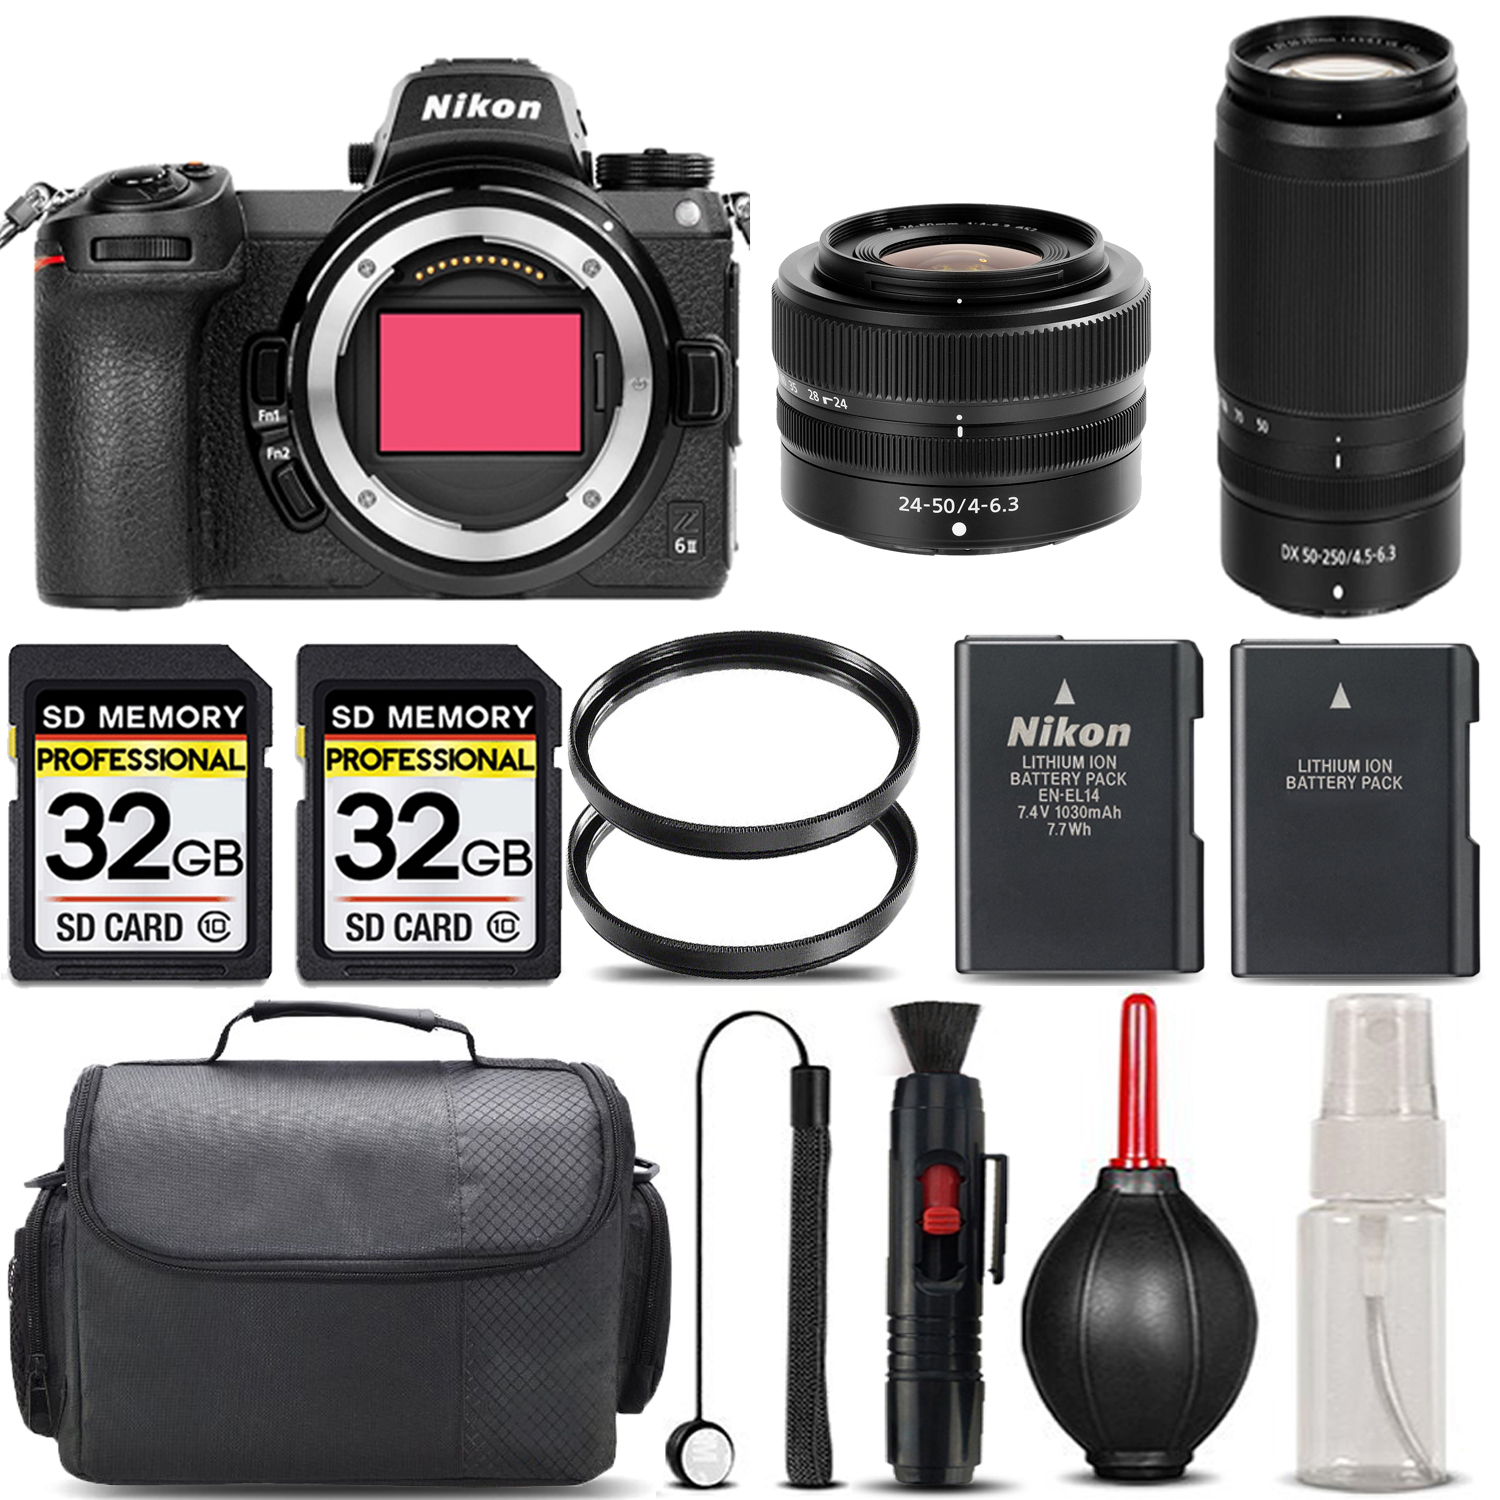 Z6 II Mirrorless + 50-250mm Lens + 24-50mm Lens + Handbag - SAVE BIG KIT *FREE SHIPPING*